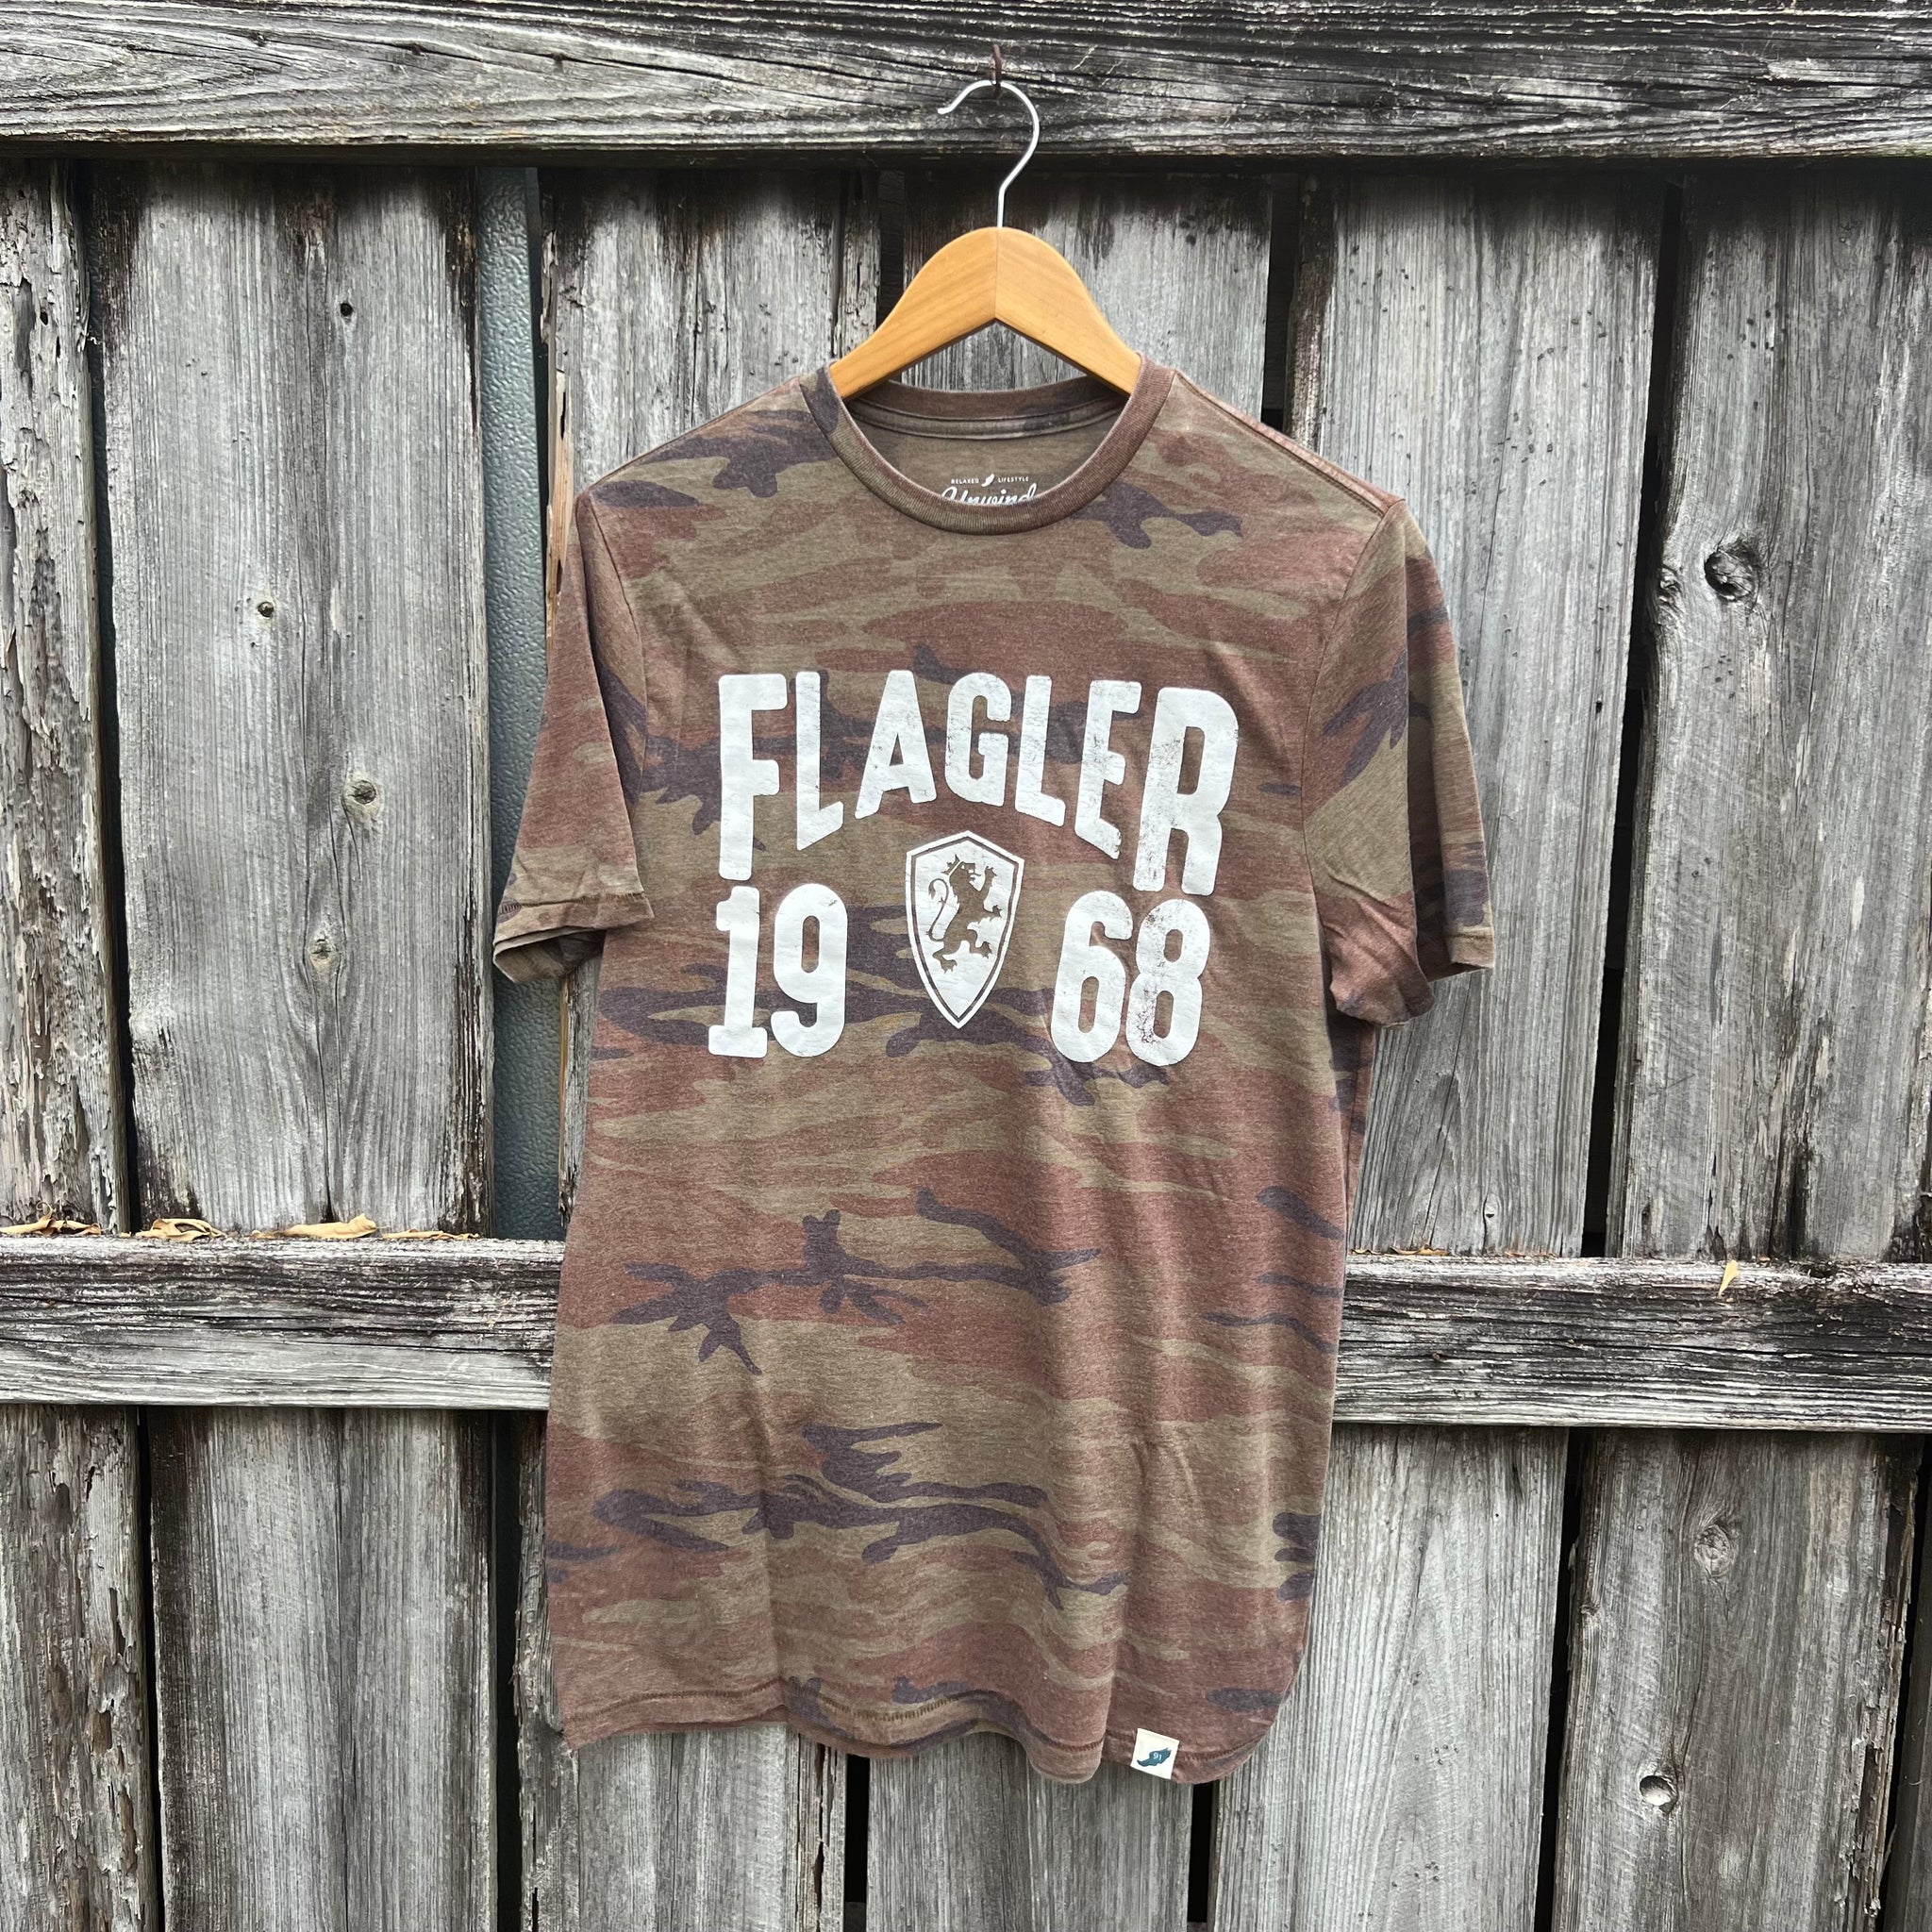 Flagler Camo T-shirt